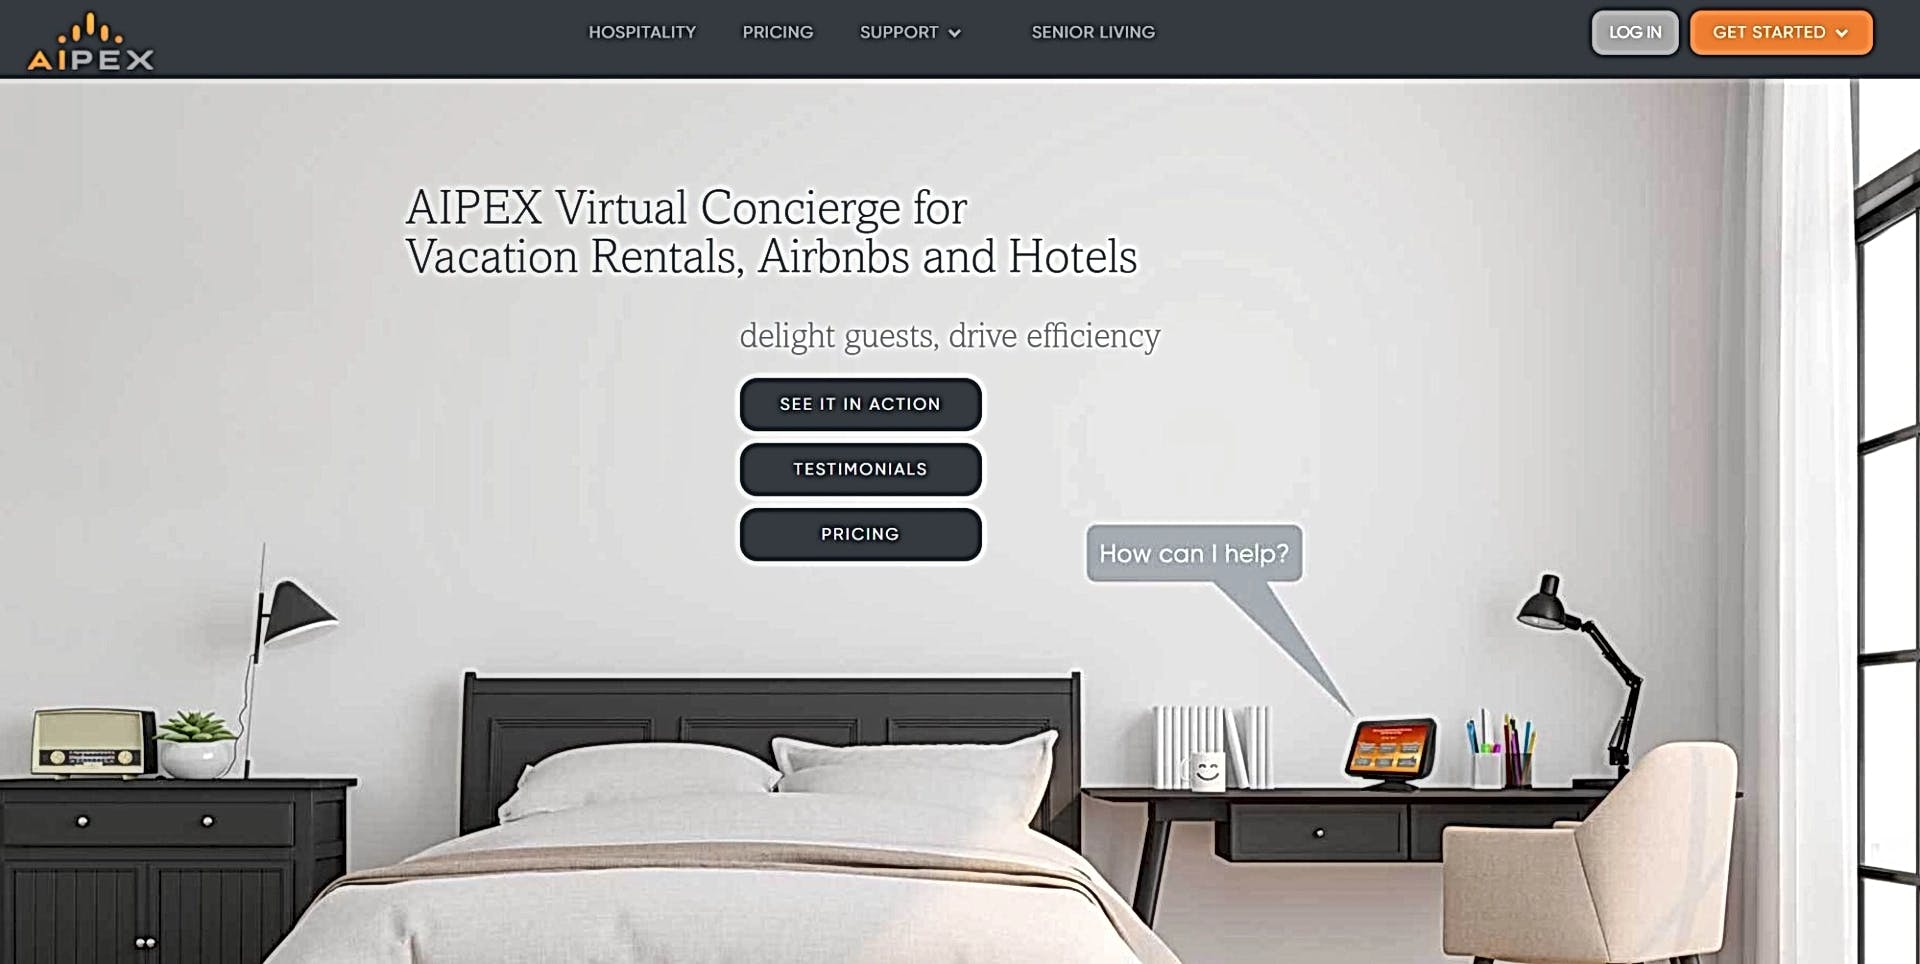 AIPEX Virtual Concierge featured